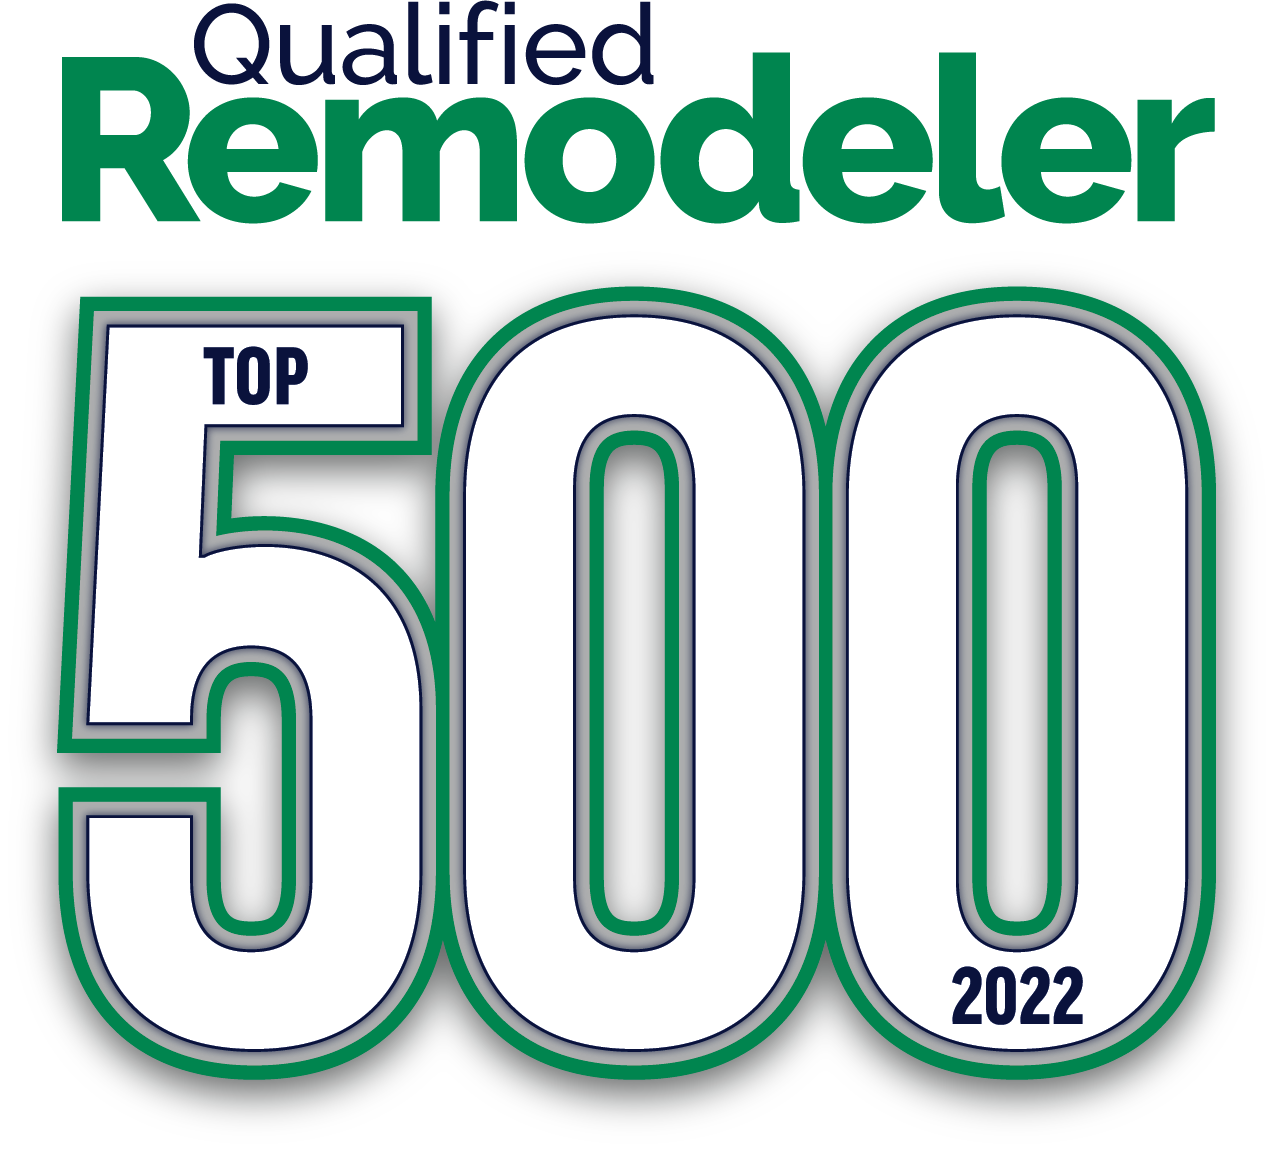 Top 500 Qualified Remodeler 2022